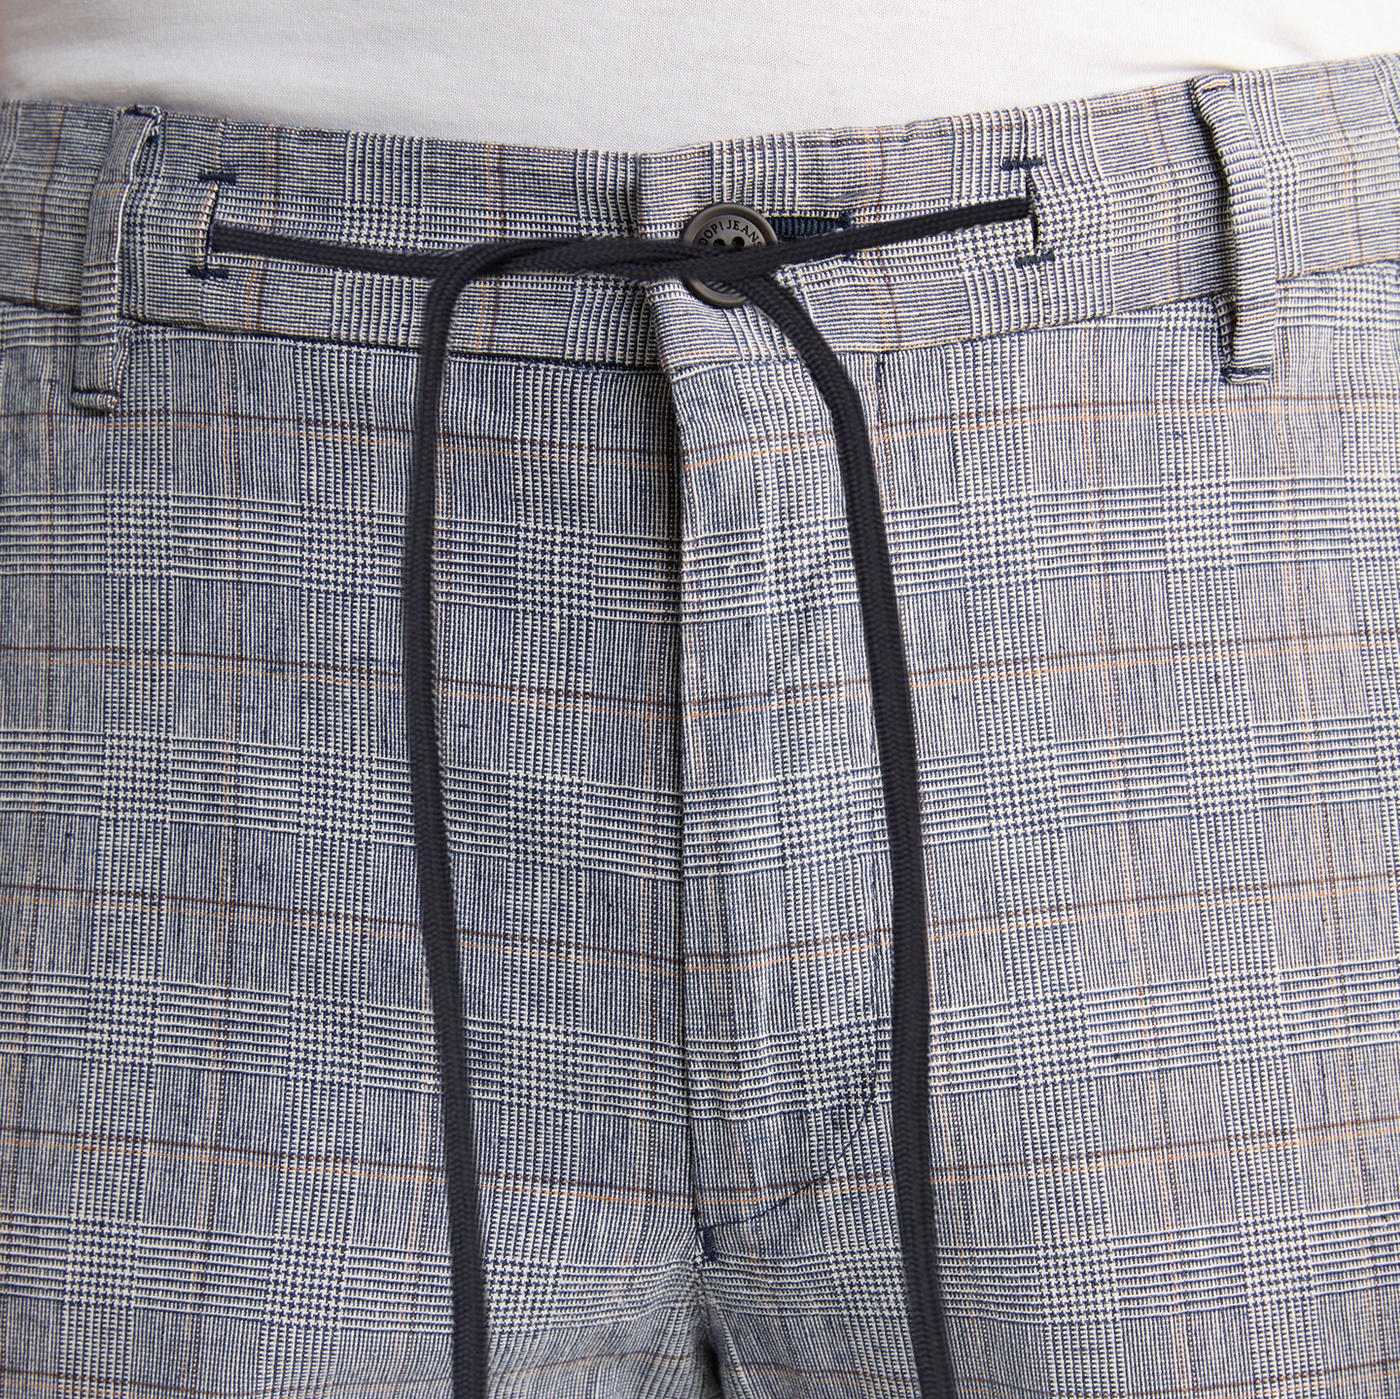 Gotstyle Fashion - Joop! Pants Glen Check Drawstring Chinos - Grey